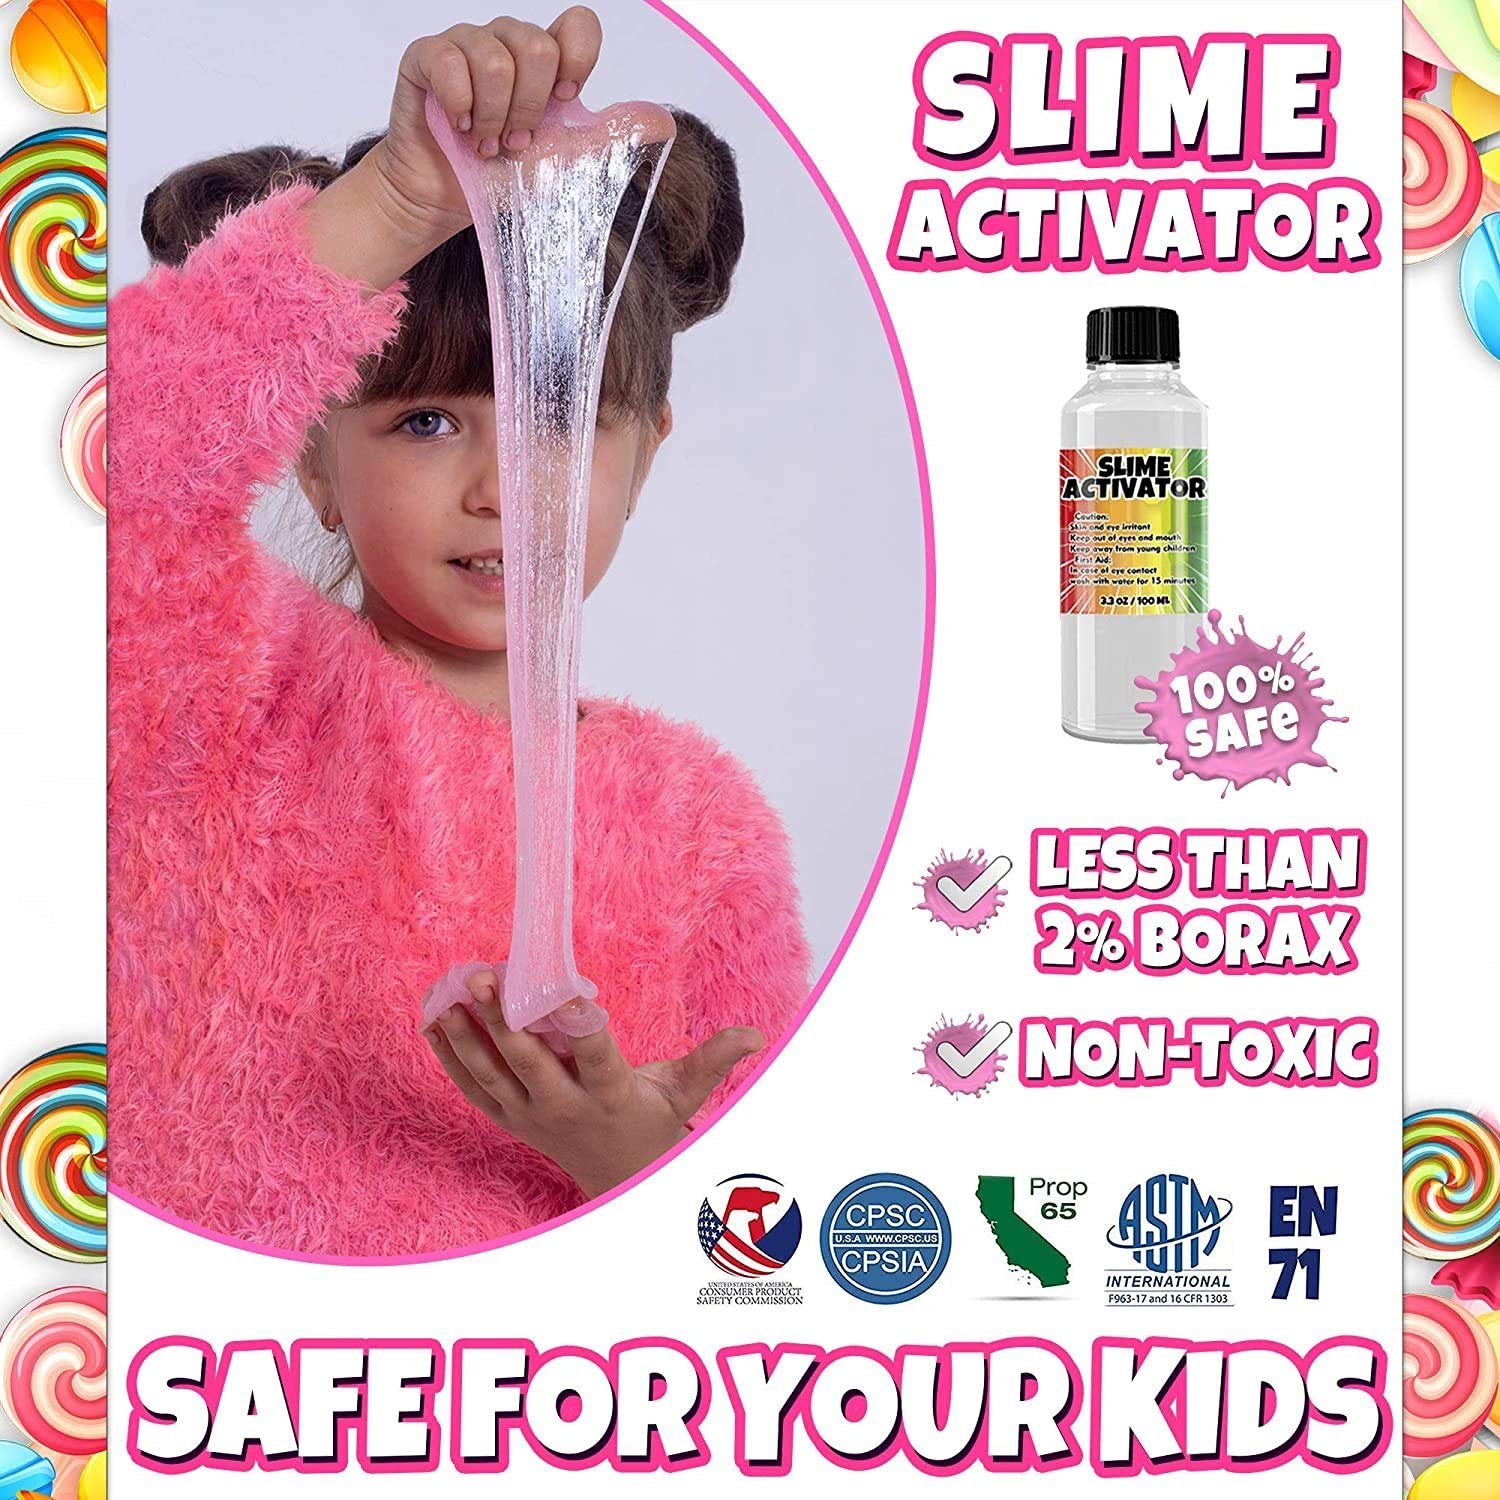 Laevo Unicorn Slime Kit - DIY Slime Making Kit - Supplies Makes Butter Slime, Cloud Slime, Clear Slime & More Sets - Toys for 5+ Years Old (Rainbow Slime Kit)